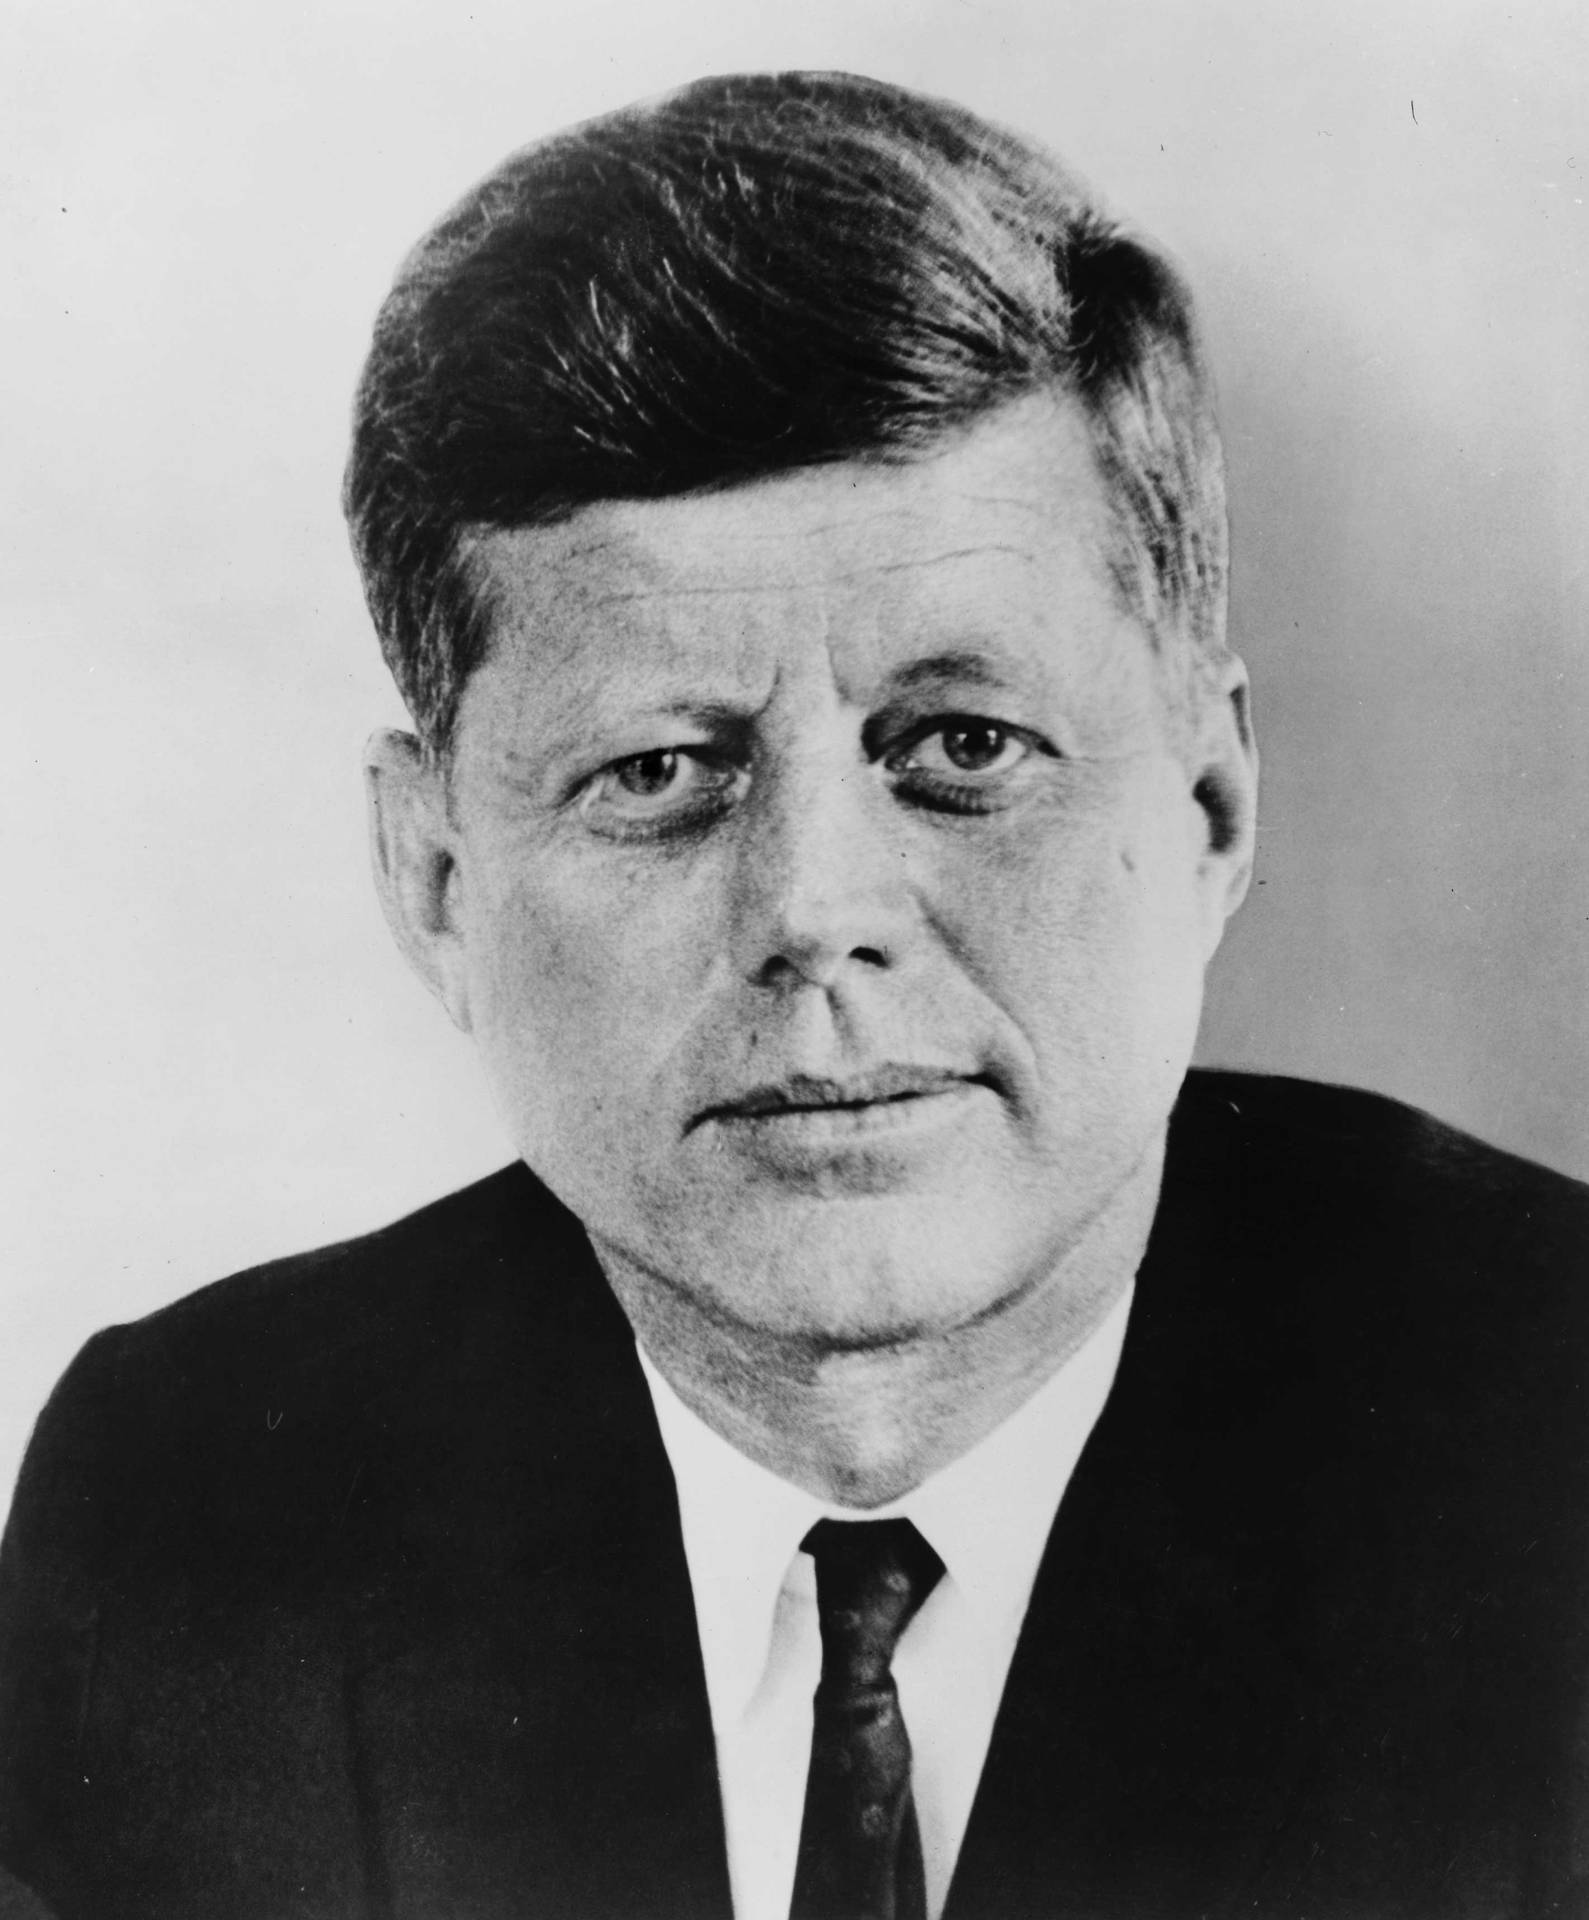 John F. Kennedy Portrait Background